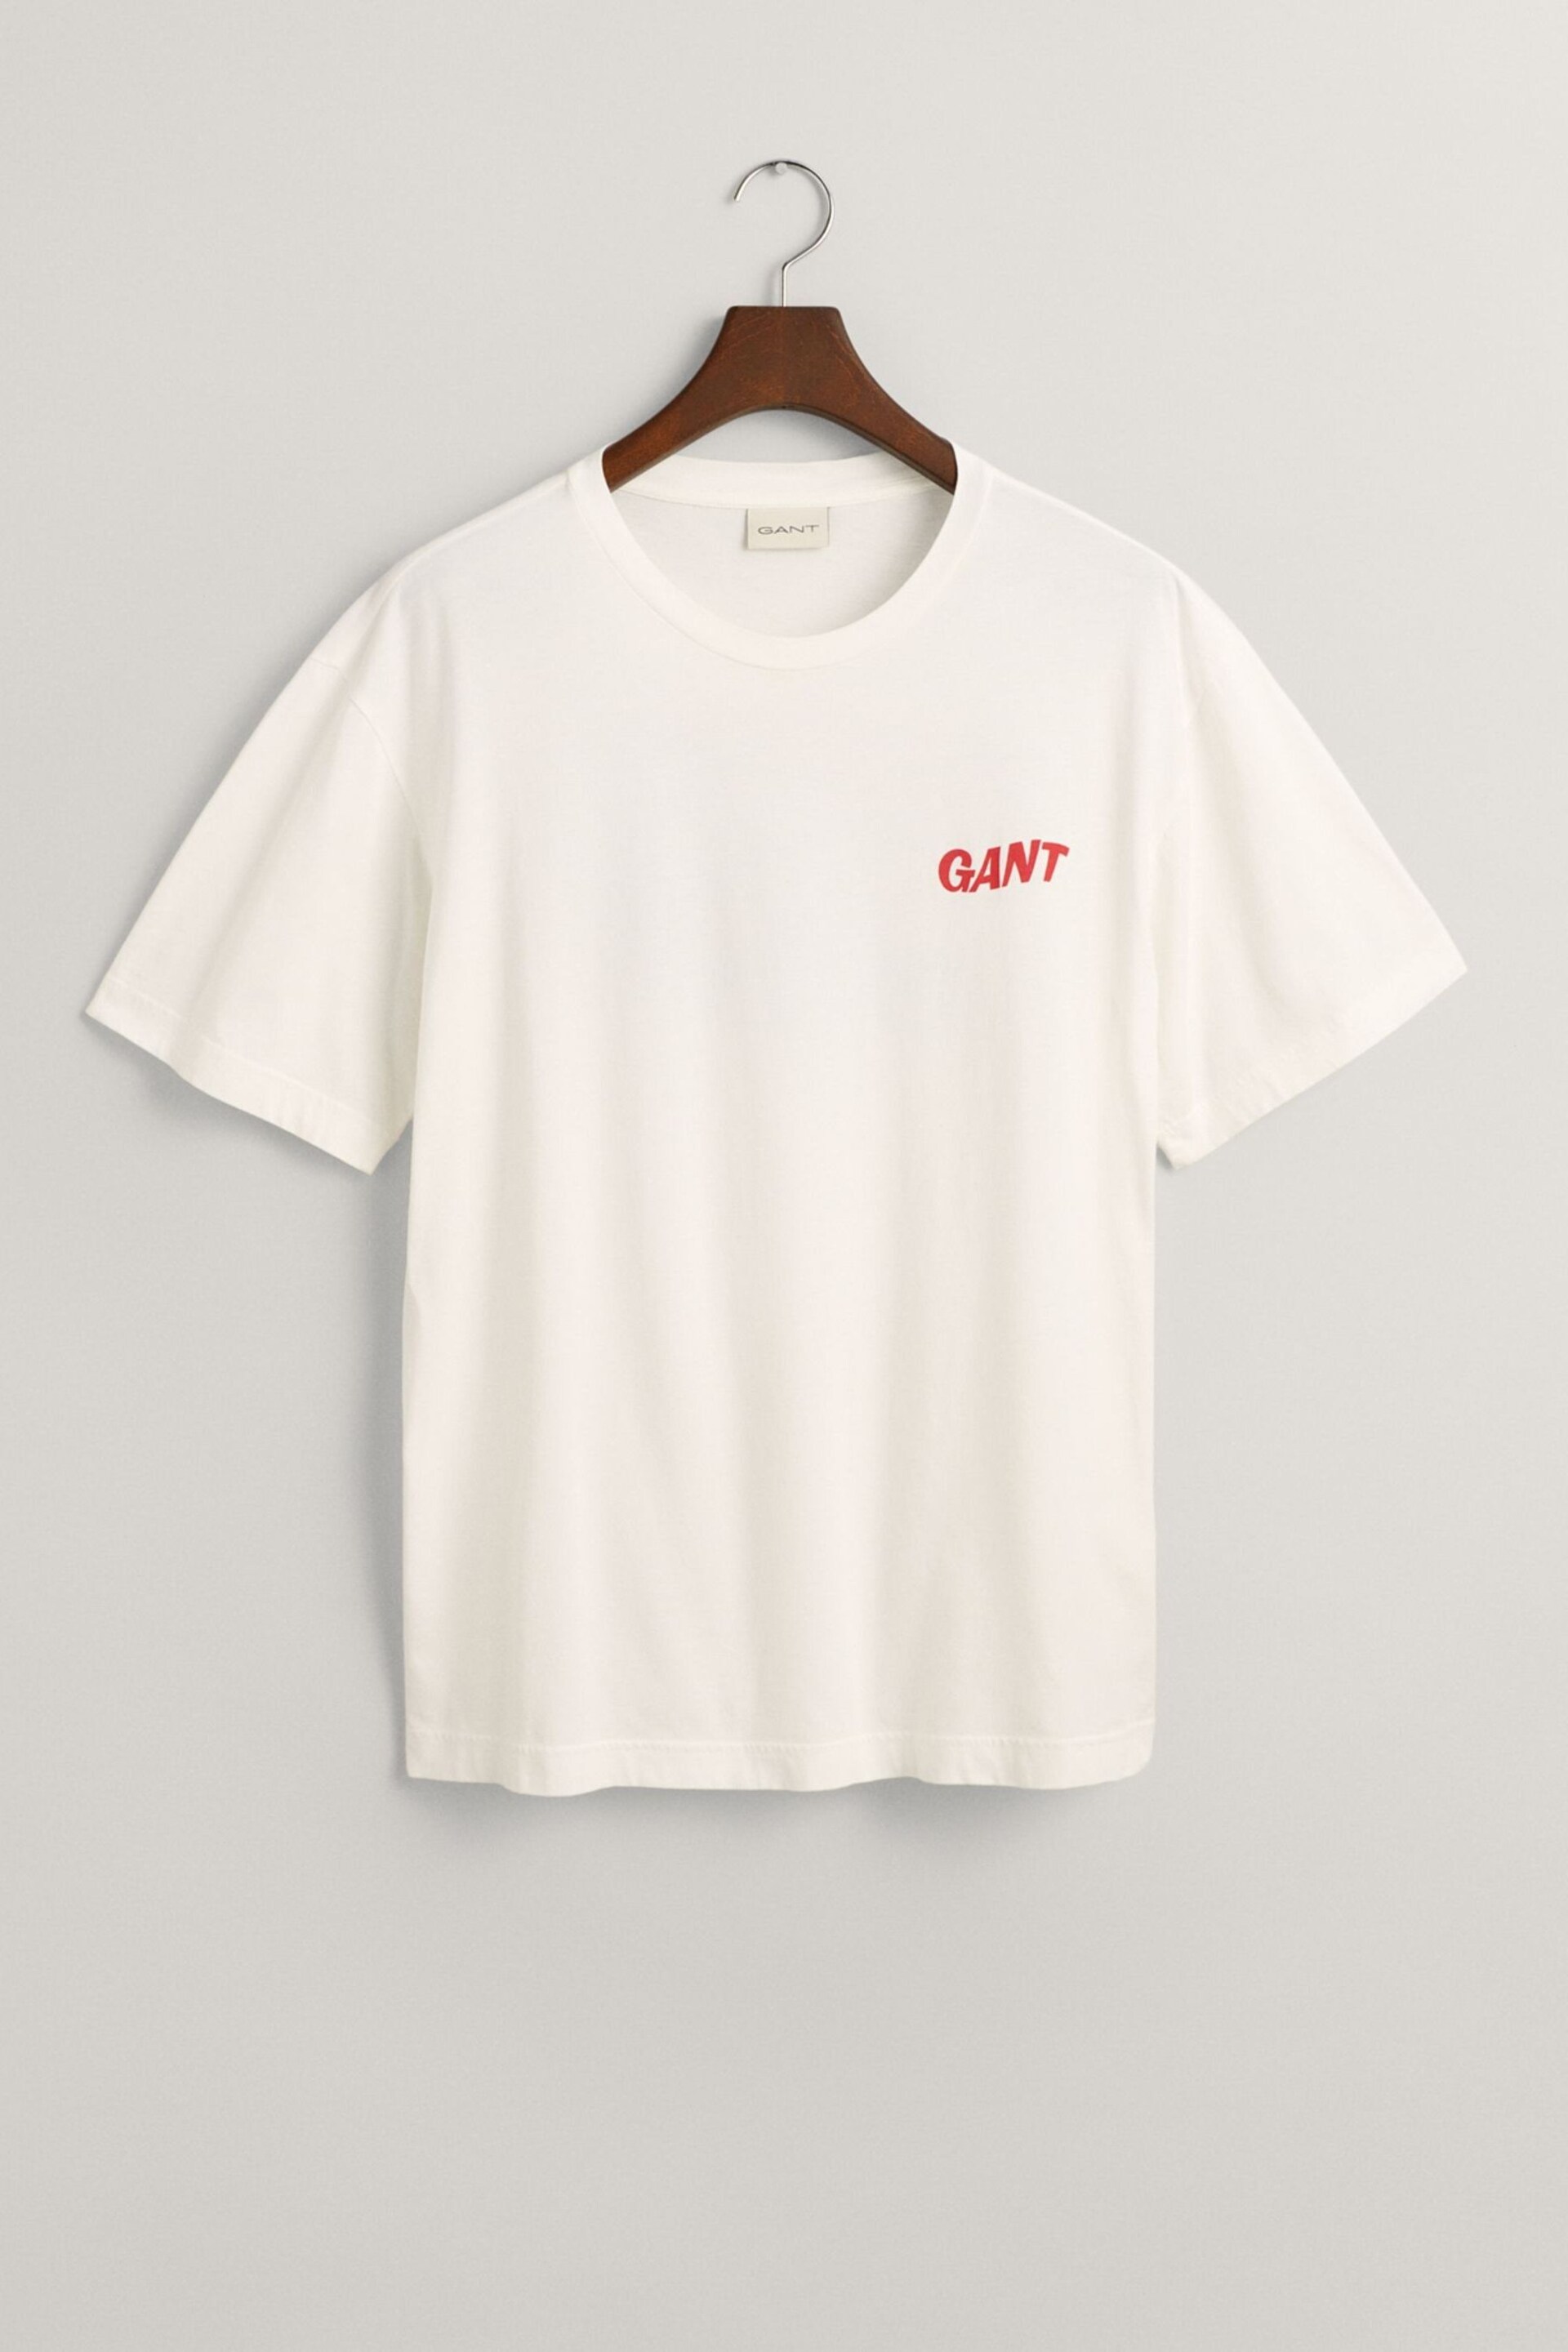 GANT White Washed Graphic T-Shirt - Image 9 of 10